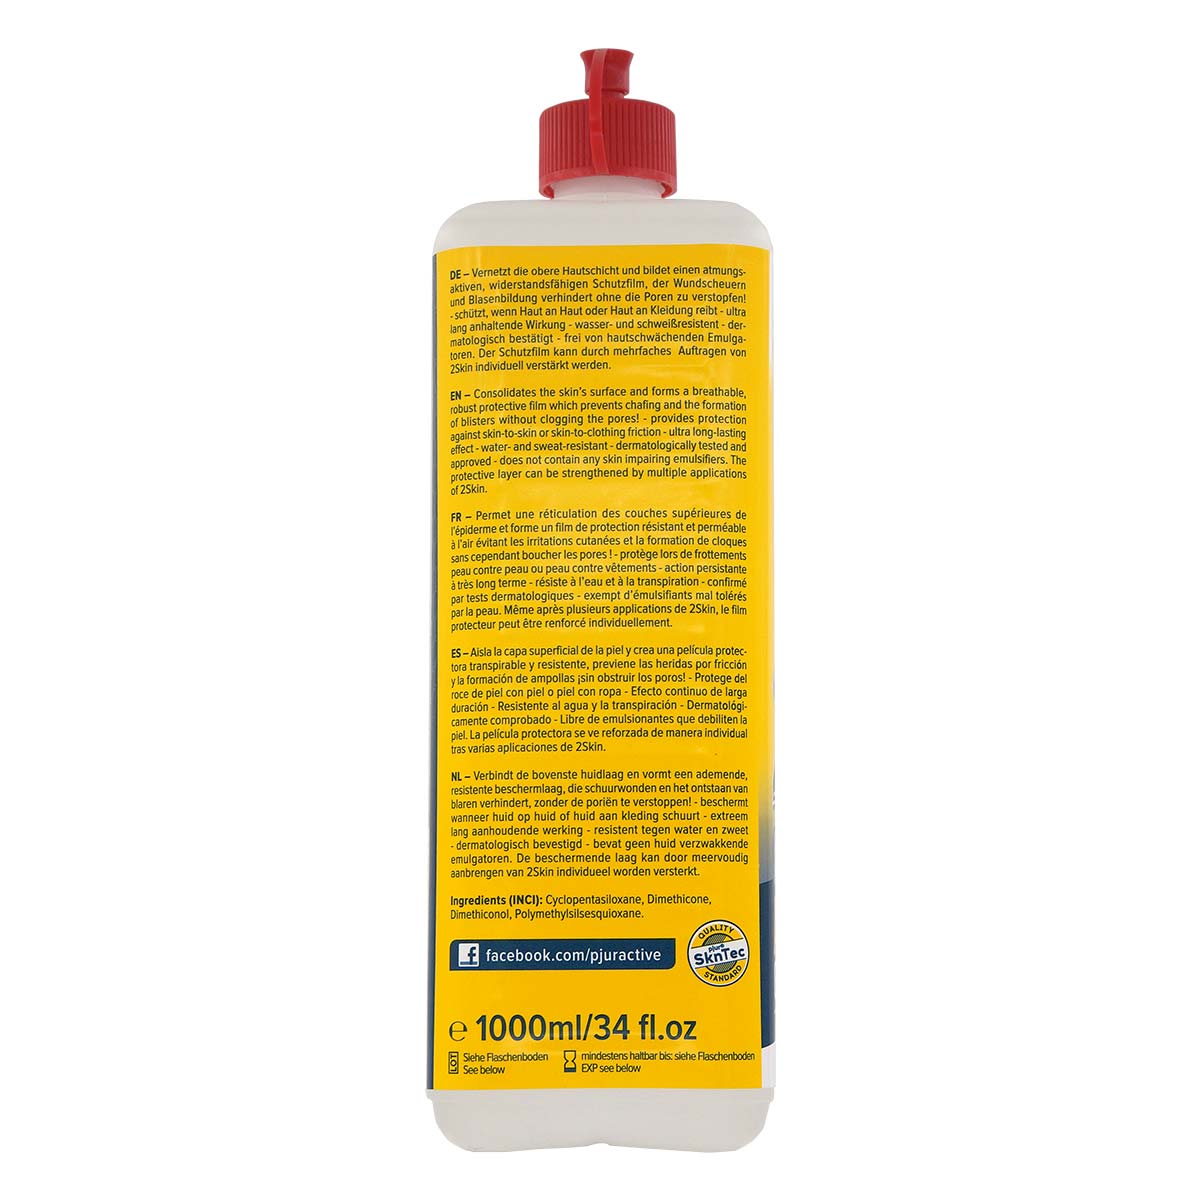 pjuractive 2skin ANTI-CHAFING GEL - 1000ml refill bottle - International Edition-p_3